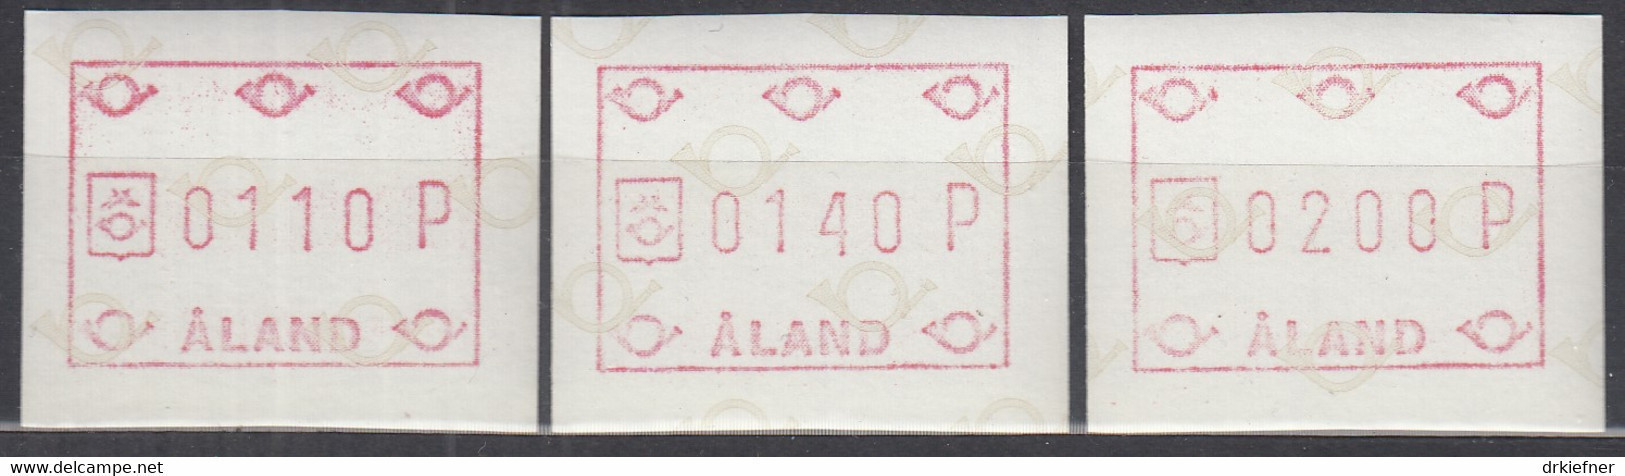 ALAND  Automatenmarke ATM 1 S1, Postfrisch **, 1984 - Ålandinseln